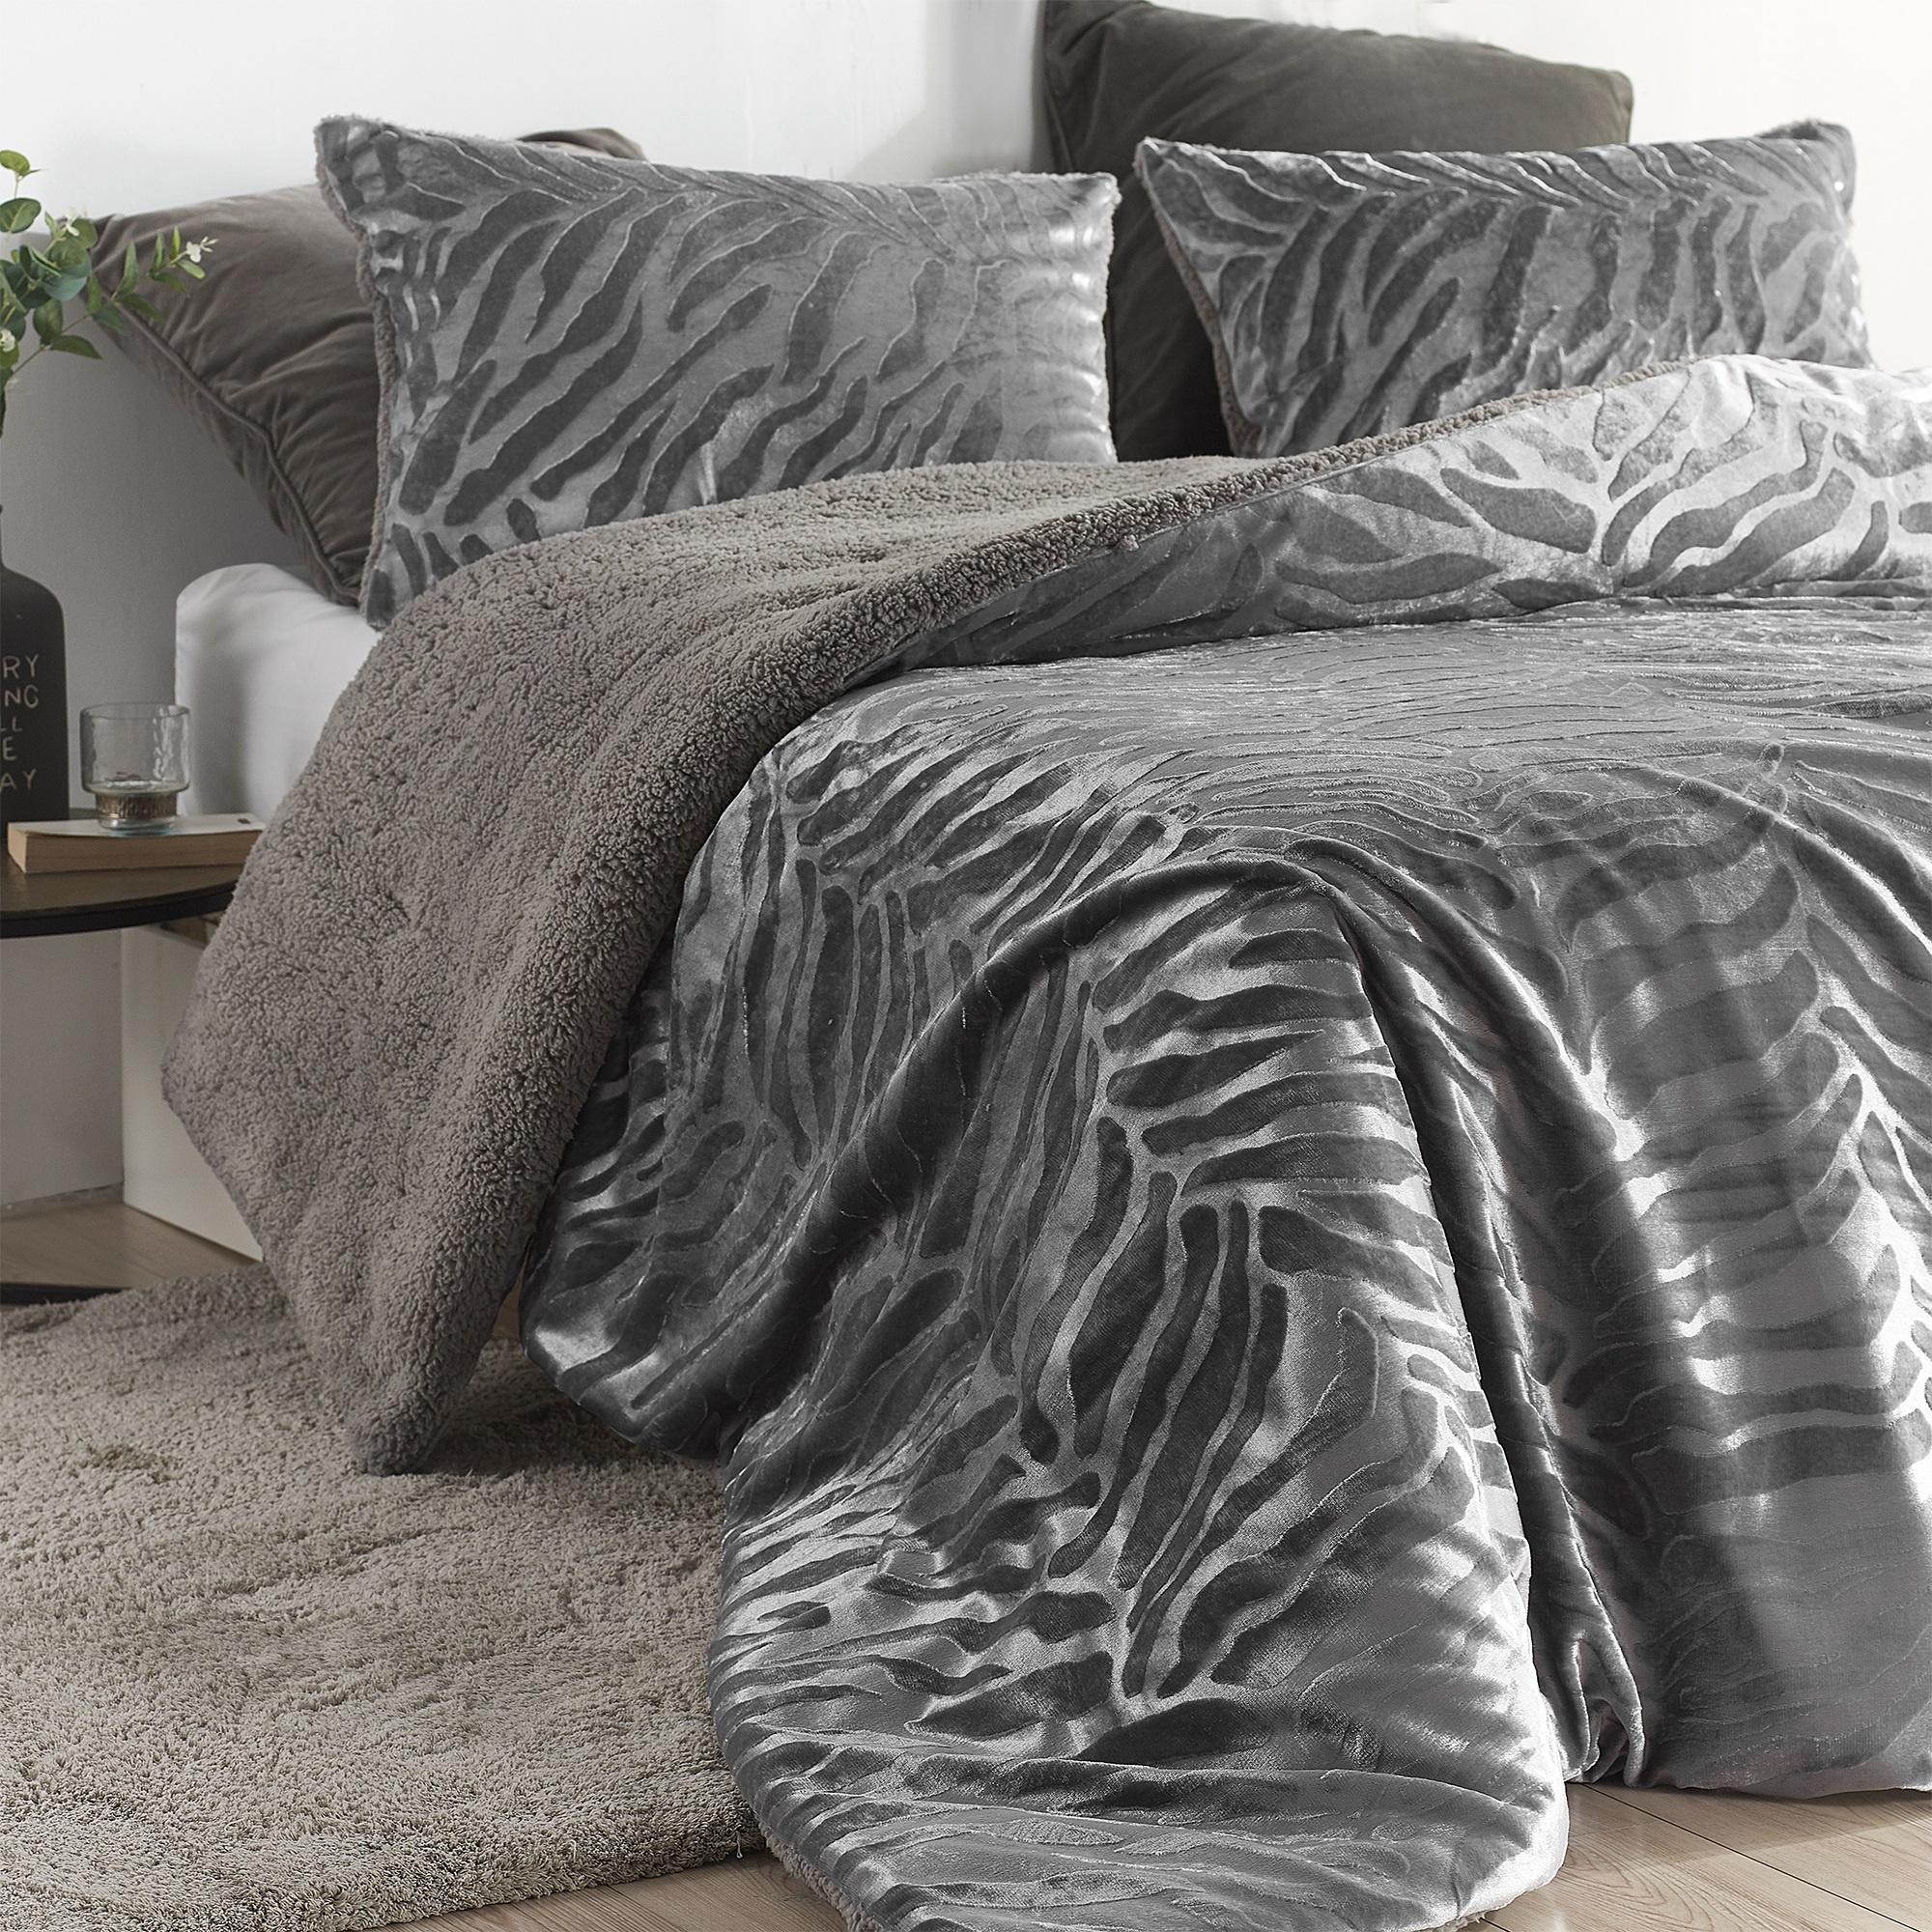 Primal Zebra - Coma Inducer Oversized Comforter - Silver Black